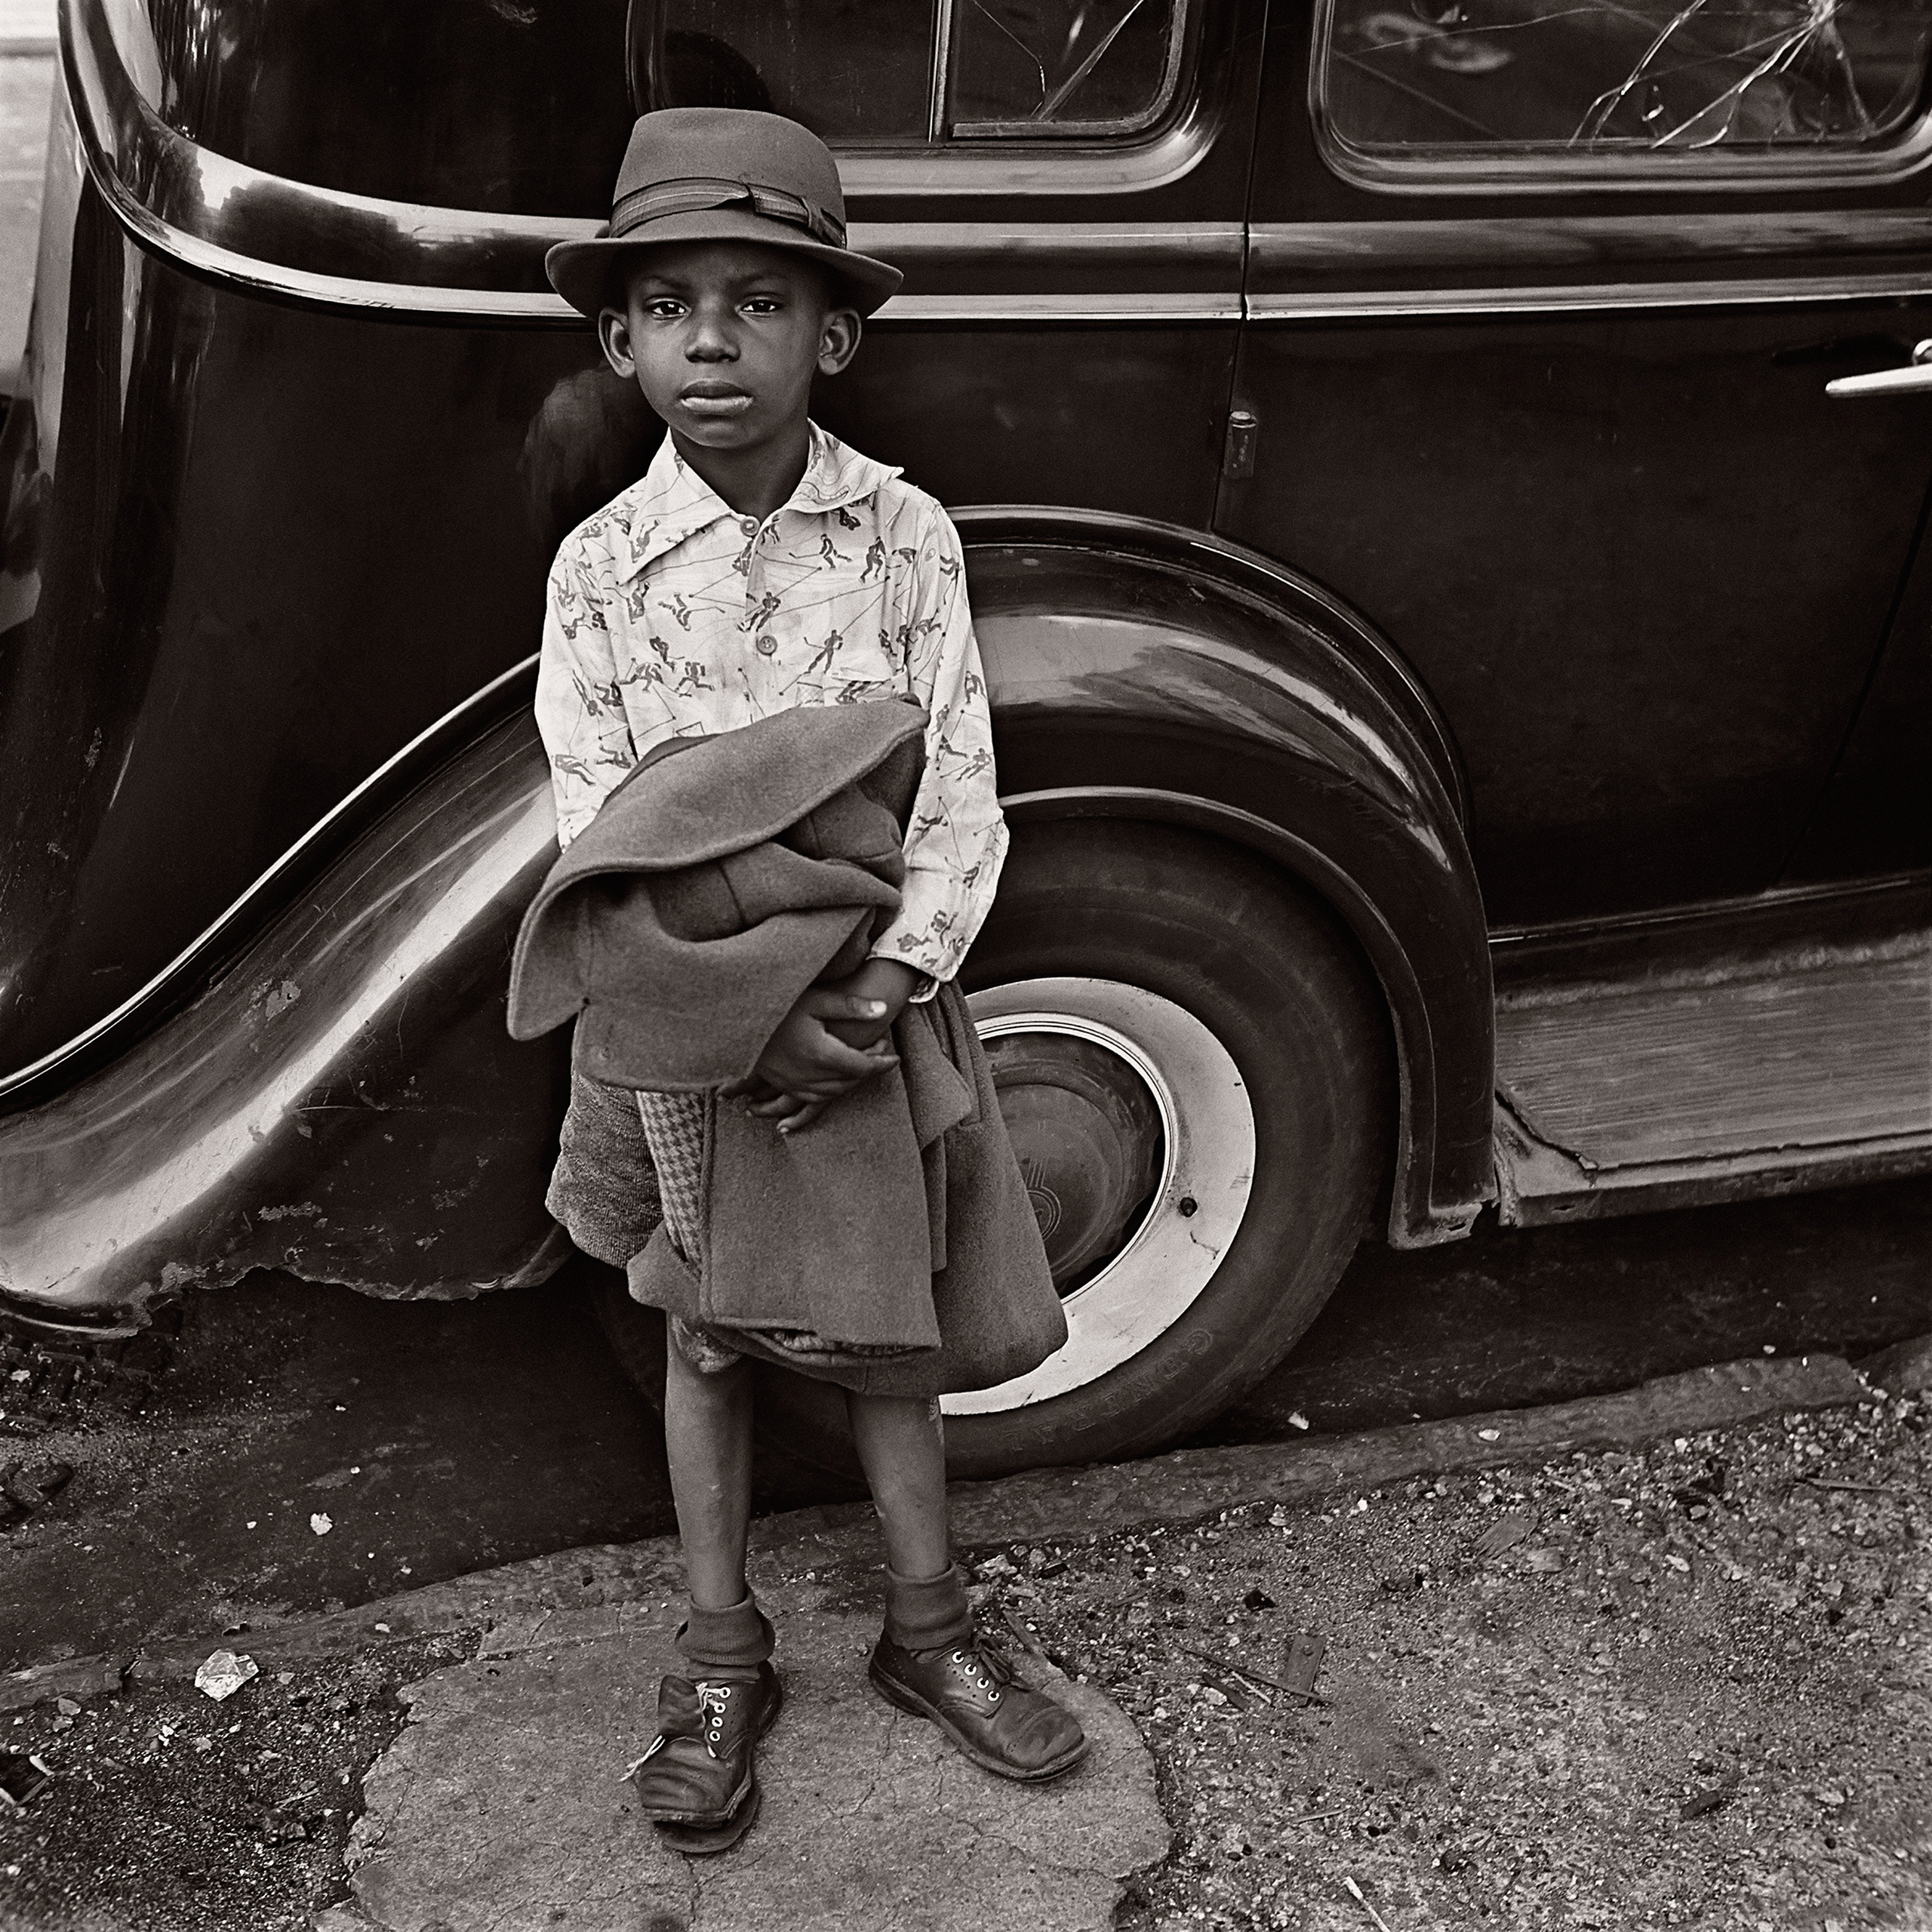 Boy and Car, New York City, 1949